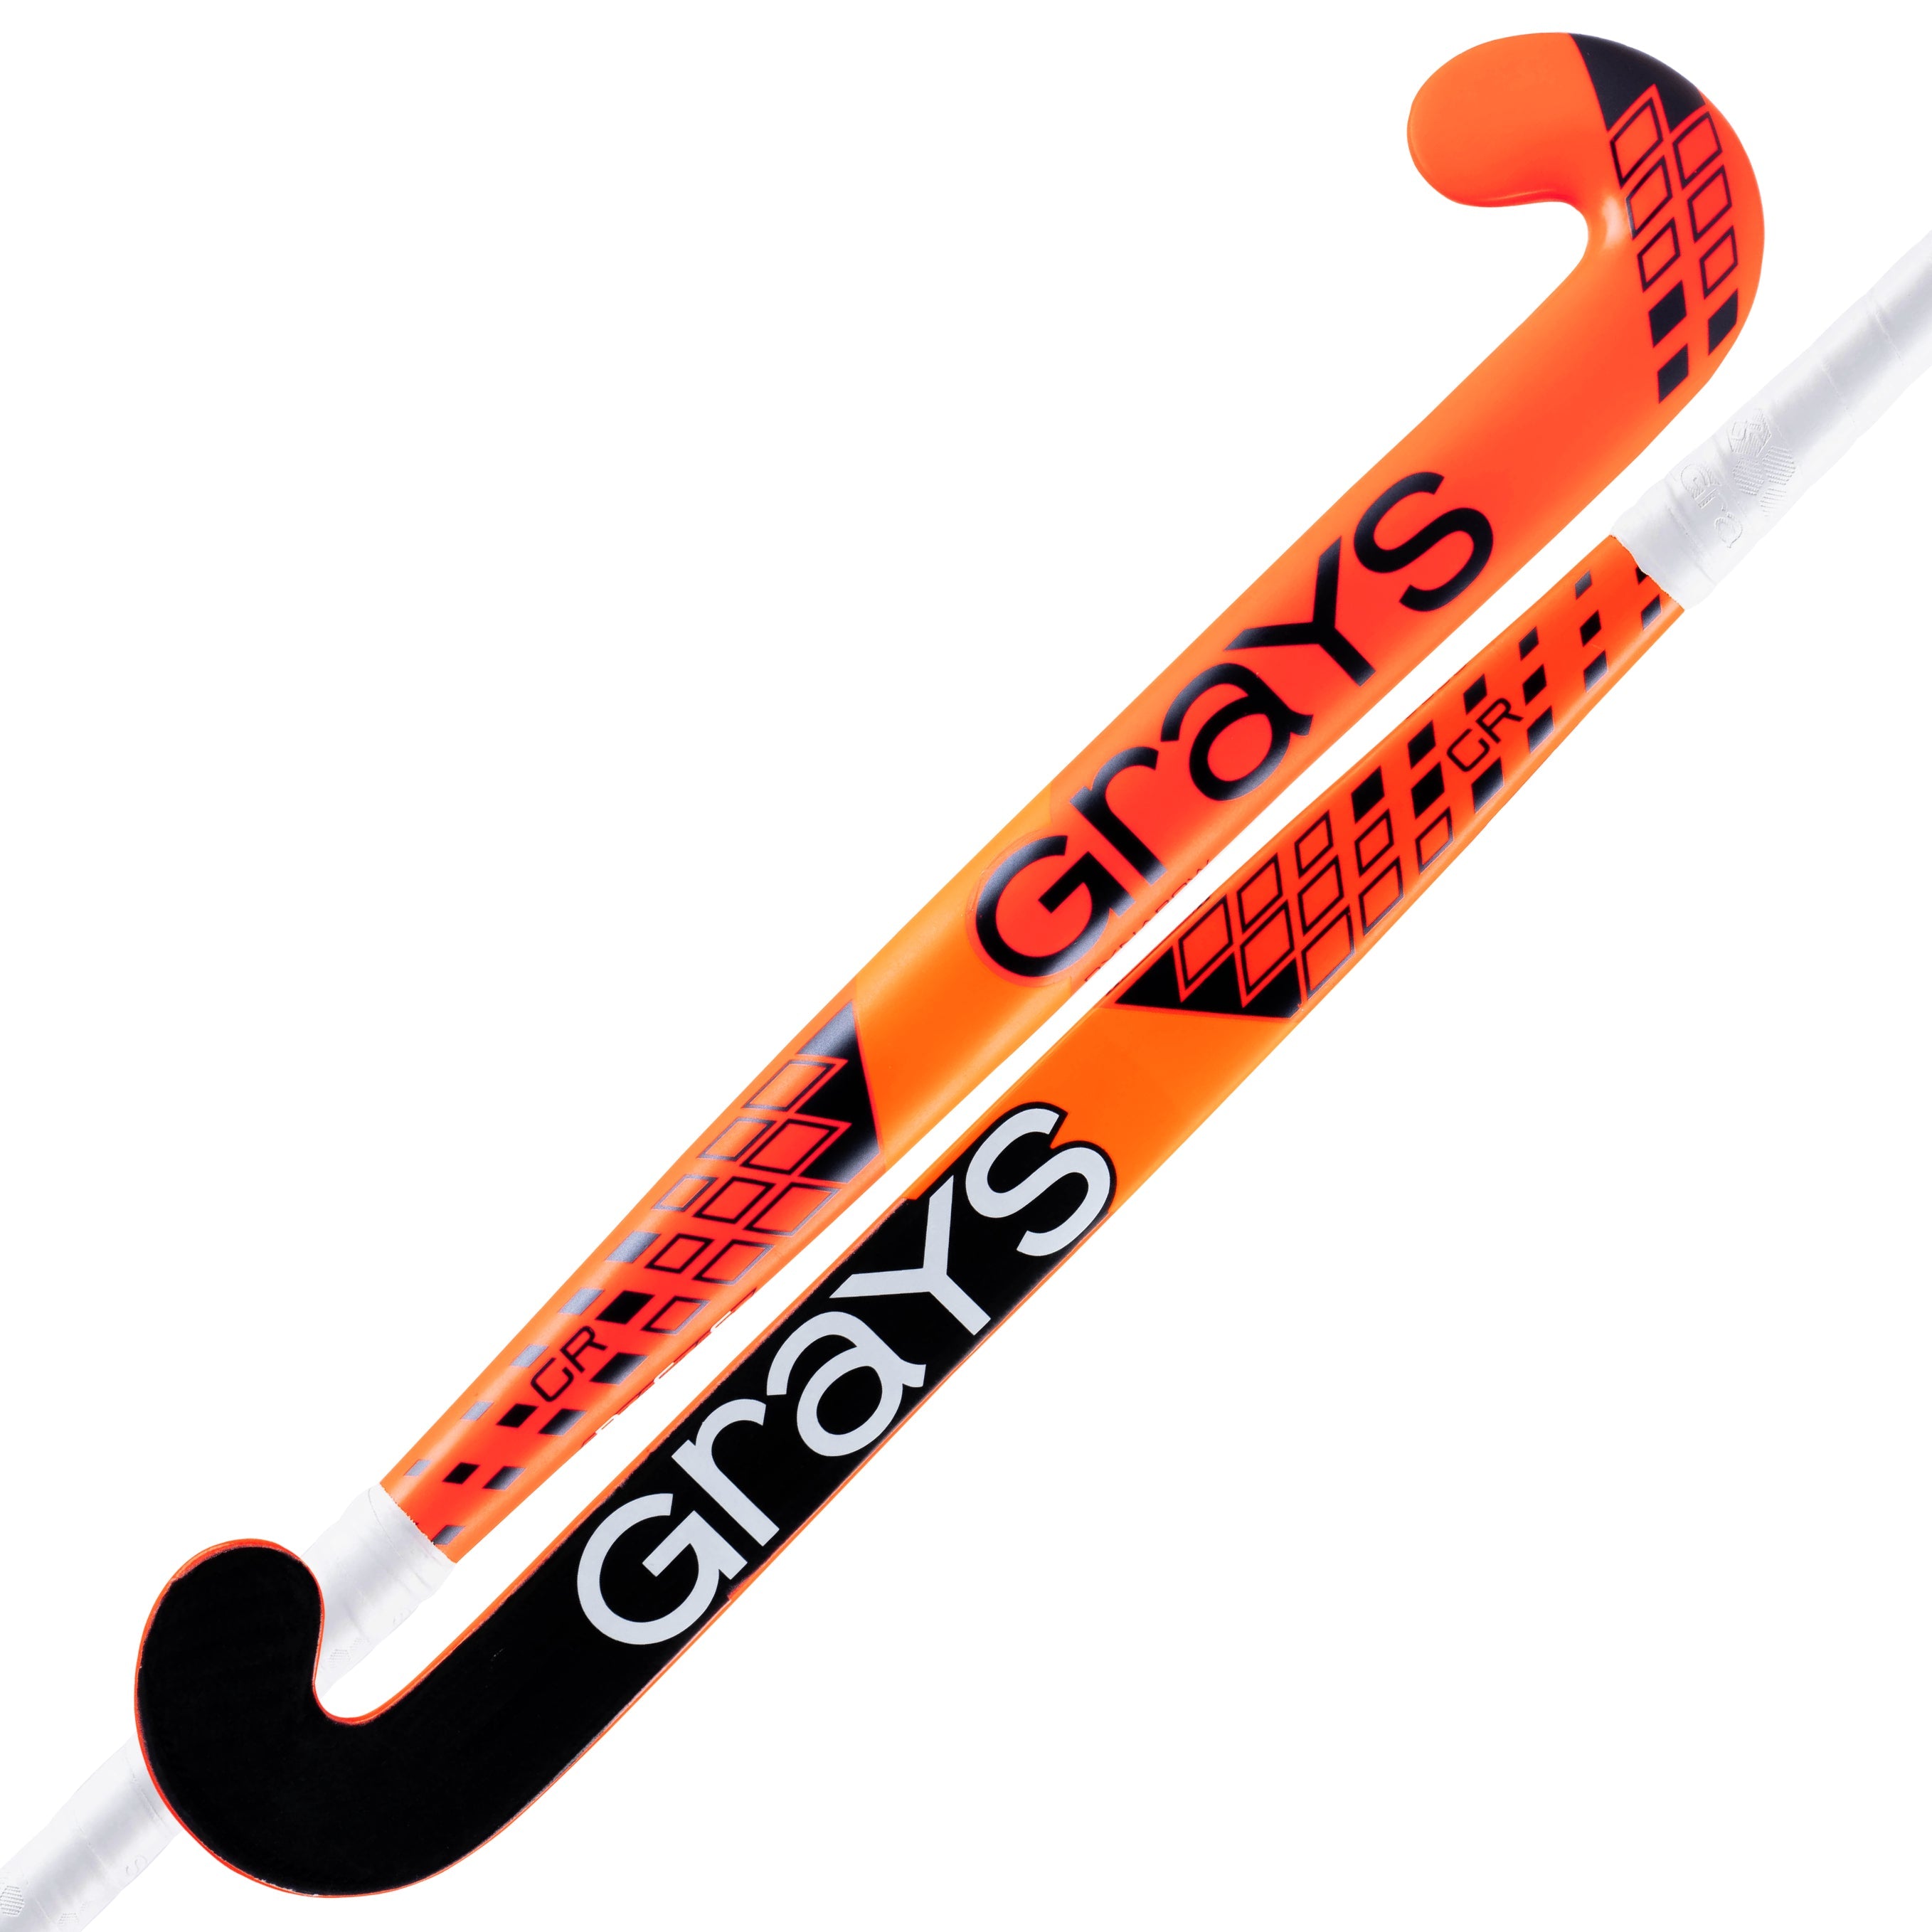 GR8000 Dynabow composite hockeystick